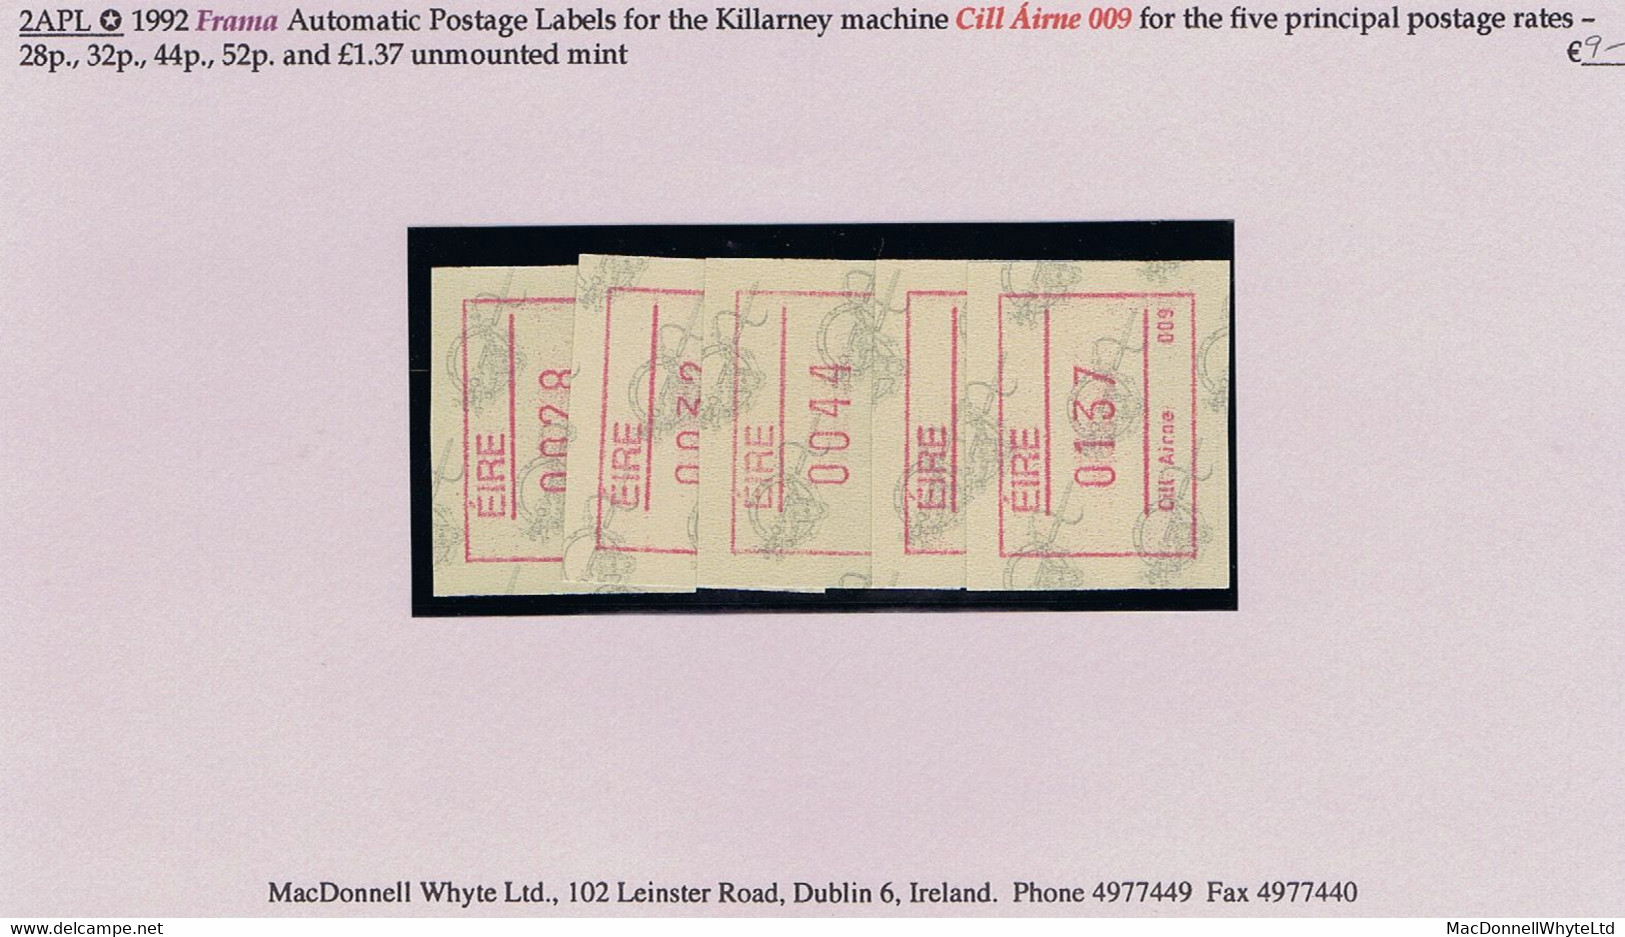 Ireland 1992 Frama Automatic Postage Labels For Killarney 009 Machine For Five Rates 28p, 32p, 44p, 52p, £1.37 Mint - Affrancature Meccaniche/Frama